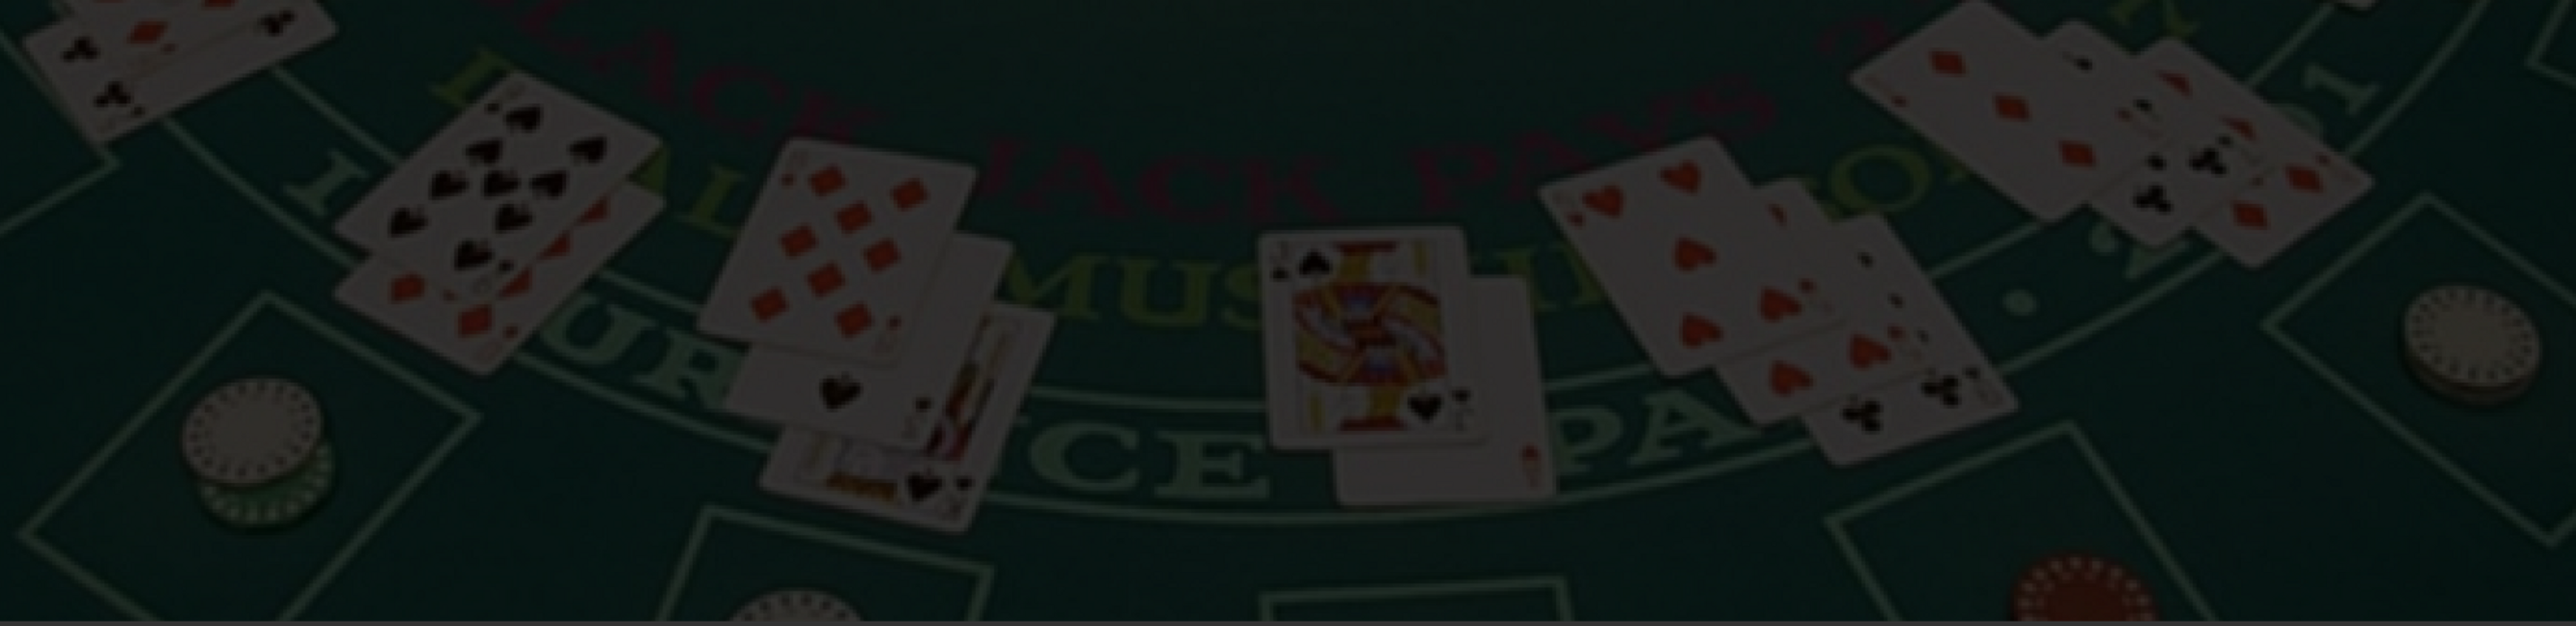 Blackjack Casino Review Banner